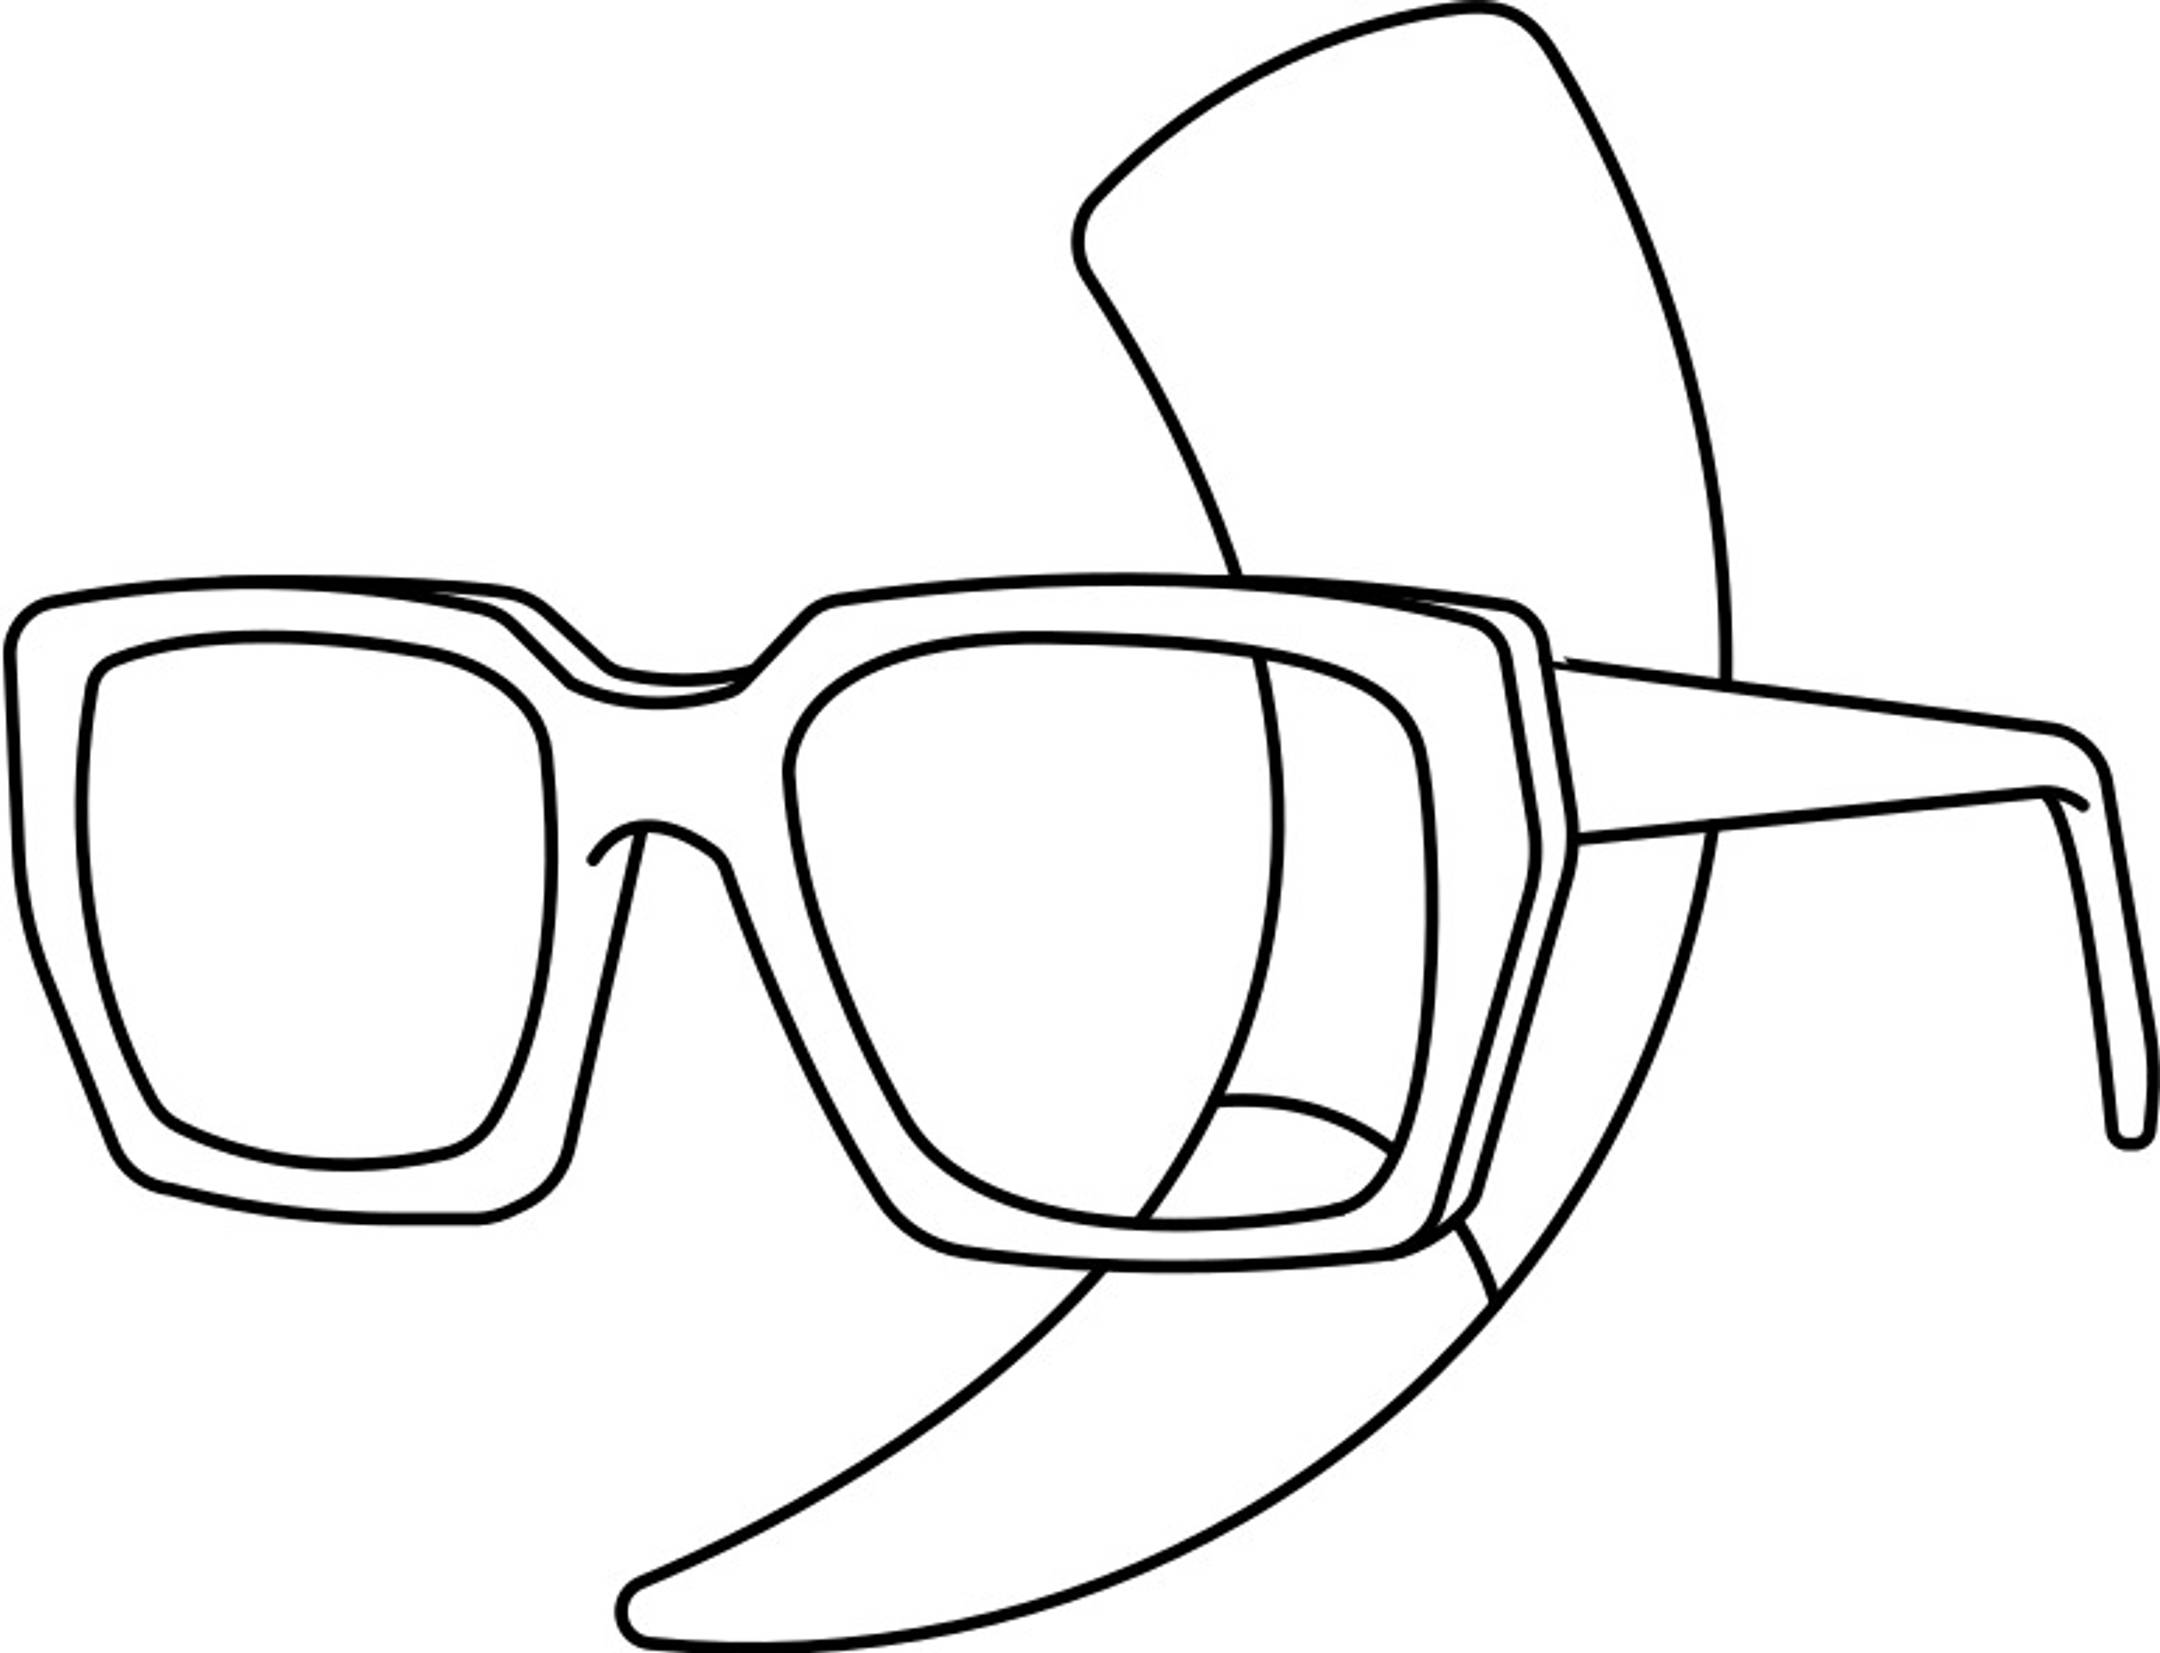 Animated drawing of buffalo horn eyeglasses